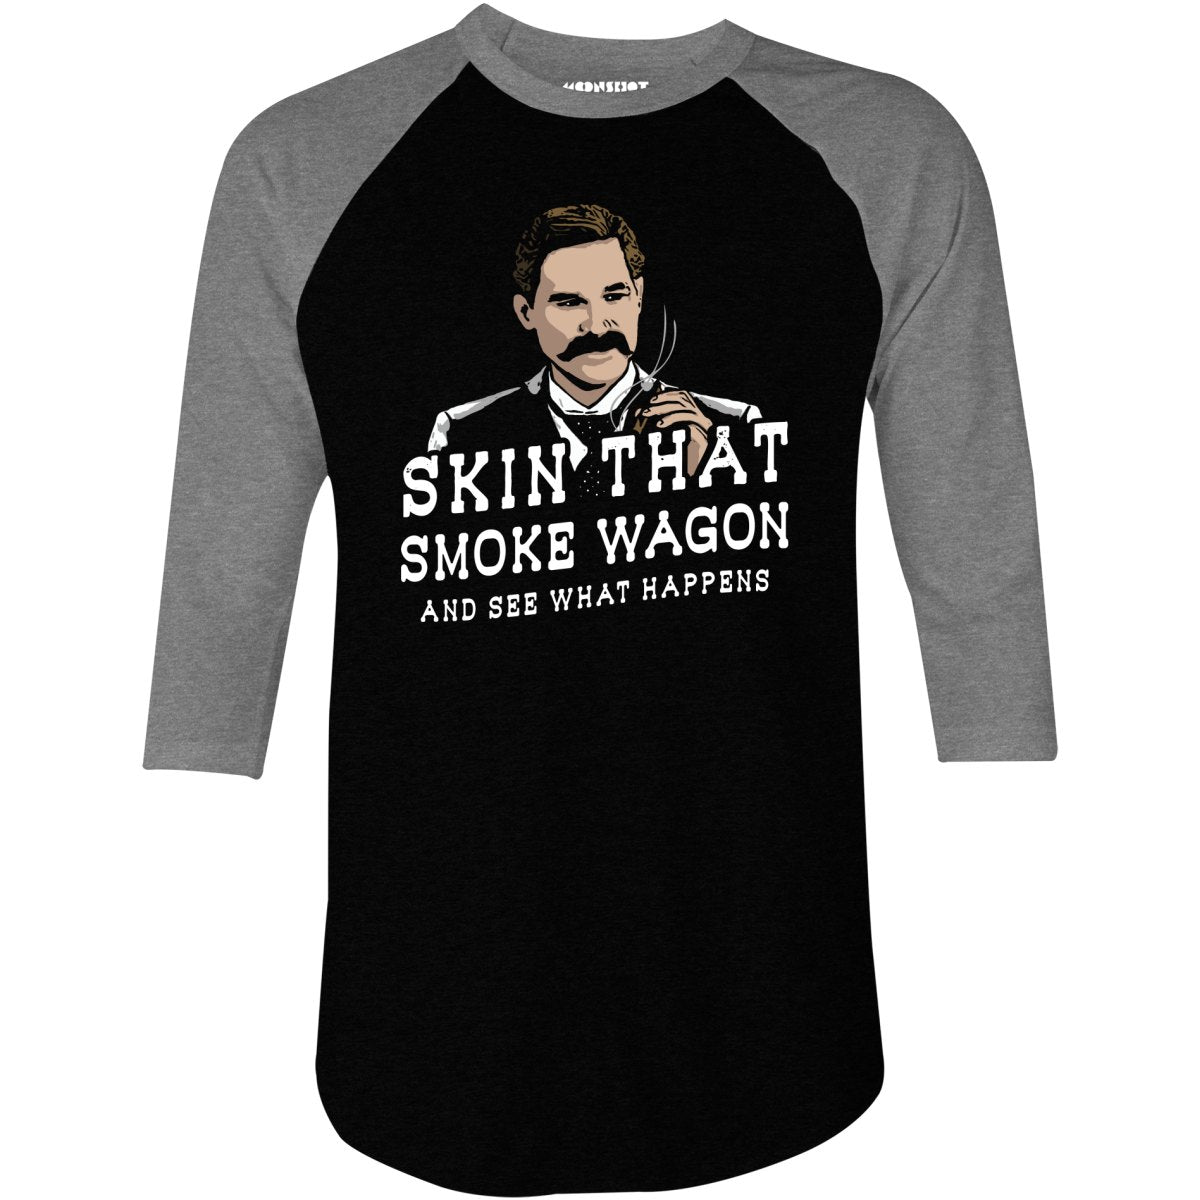 Skin That Smoke Wagon and See What Happens - 3/4 Sleeve Raglan T-Shirt